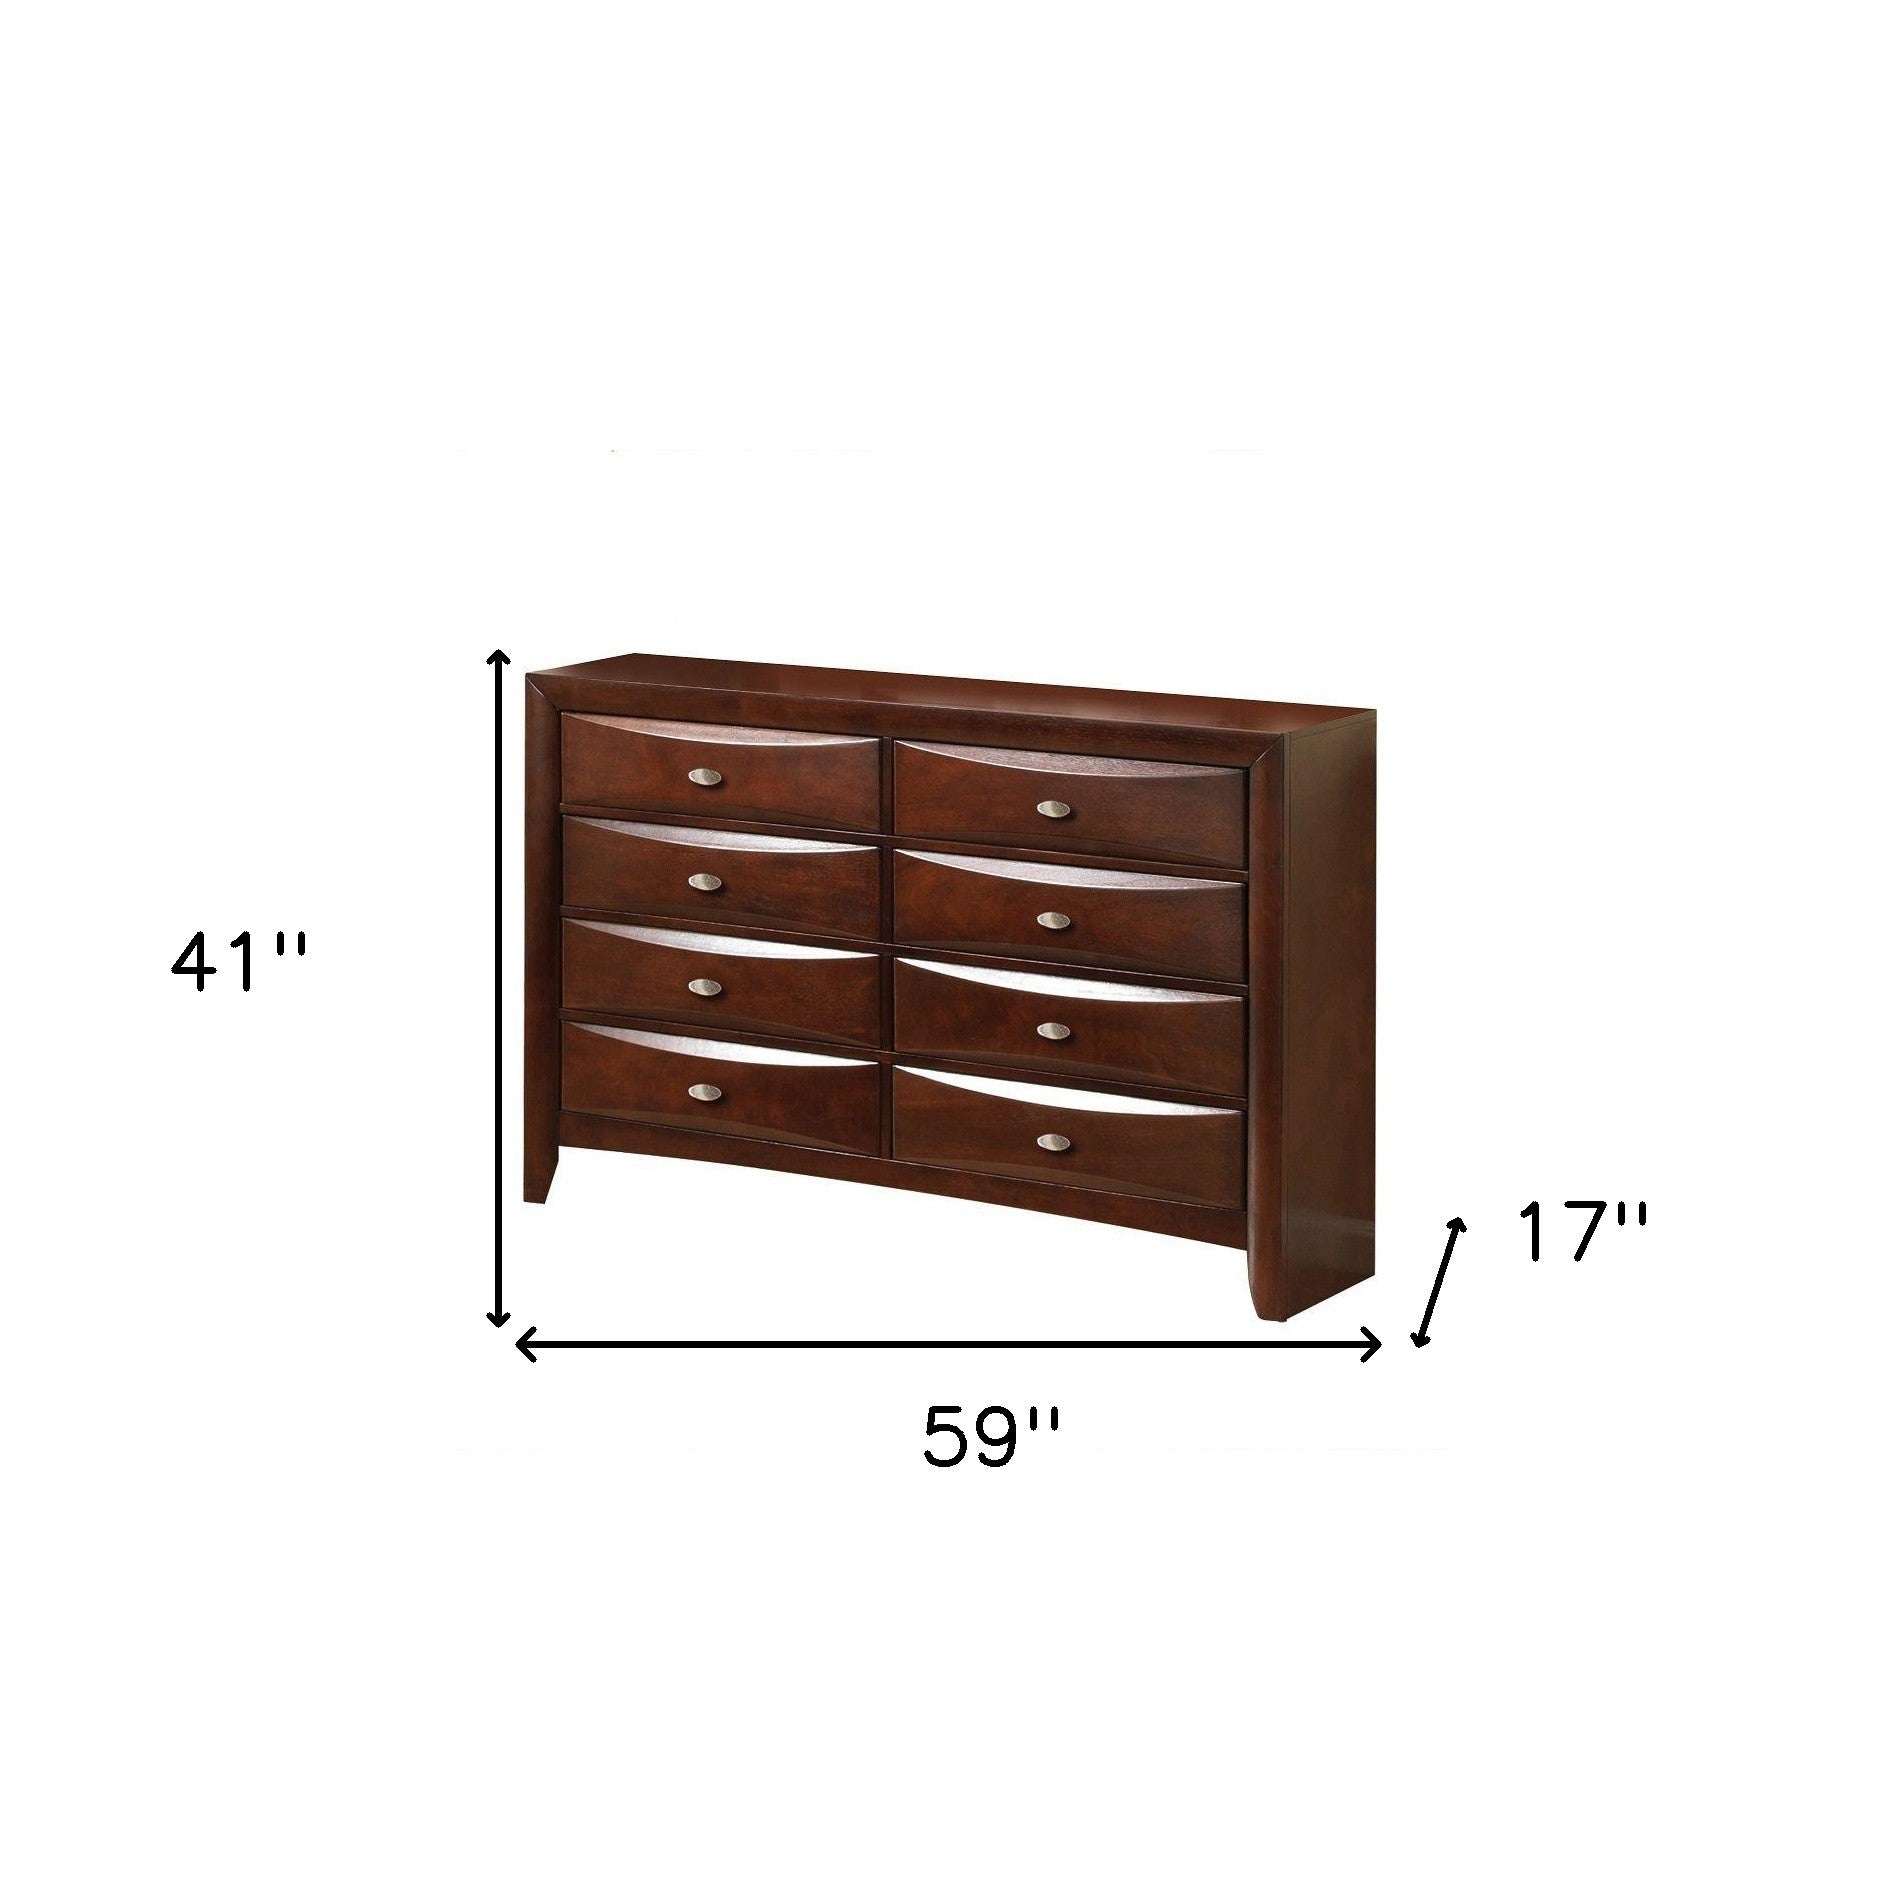 41" Espresso Wood Finish Dresser With 8 Drawers